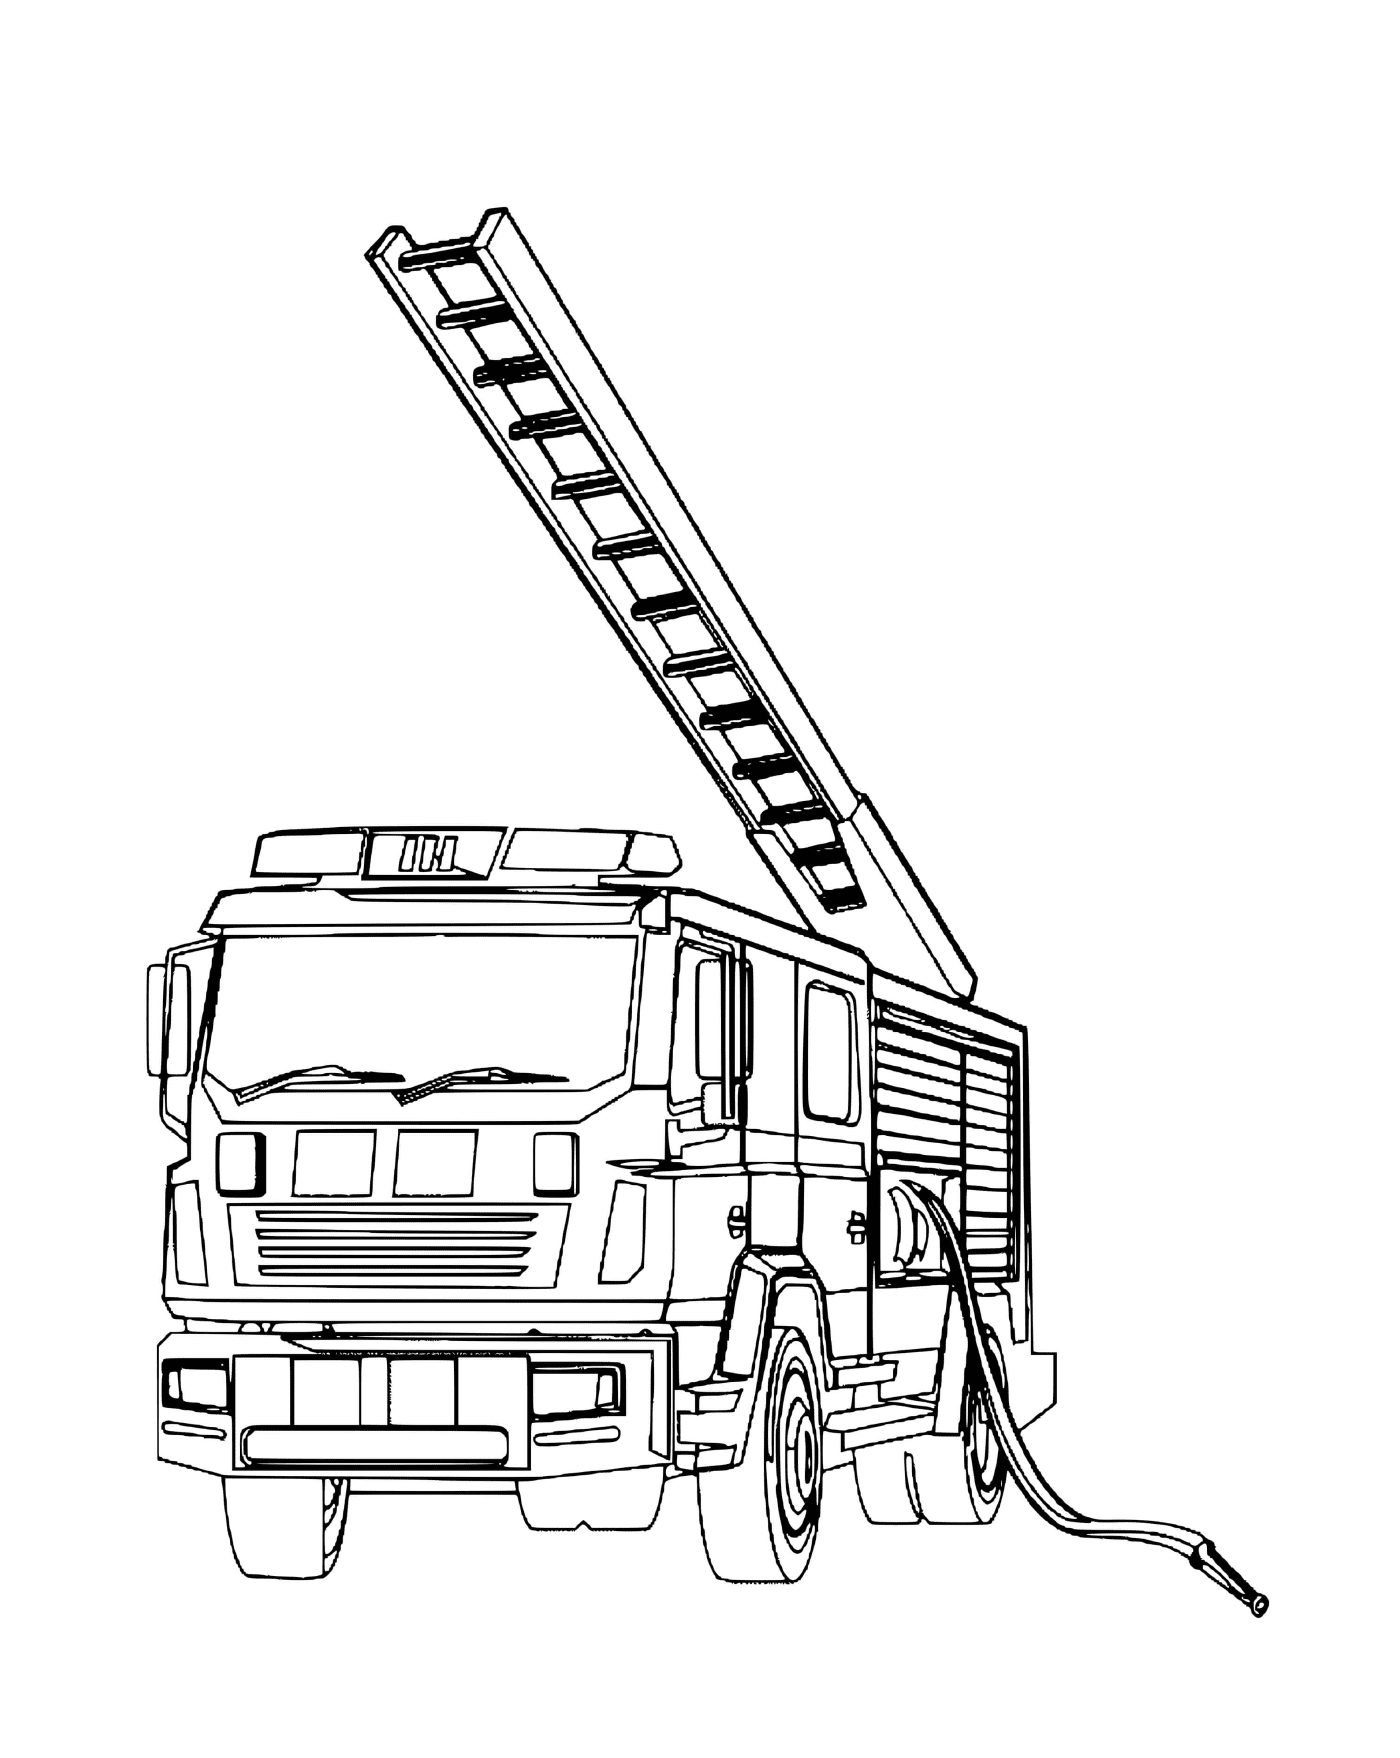  un camion dei pompieri con una grande scala 